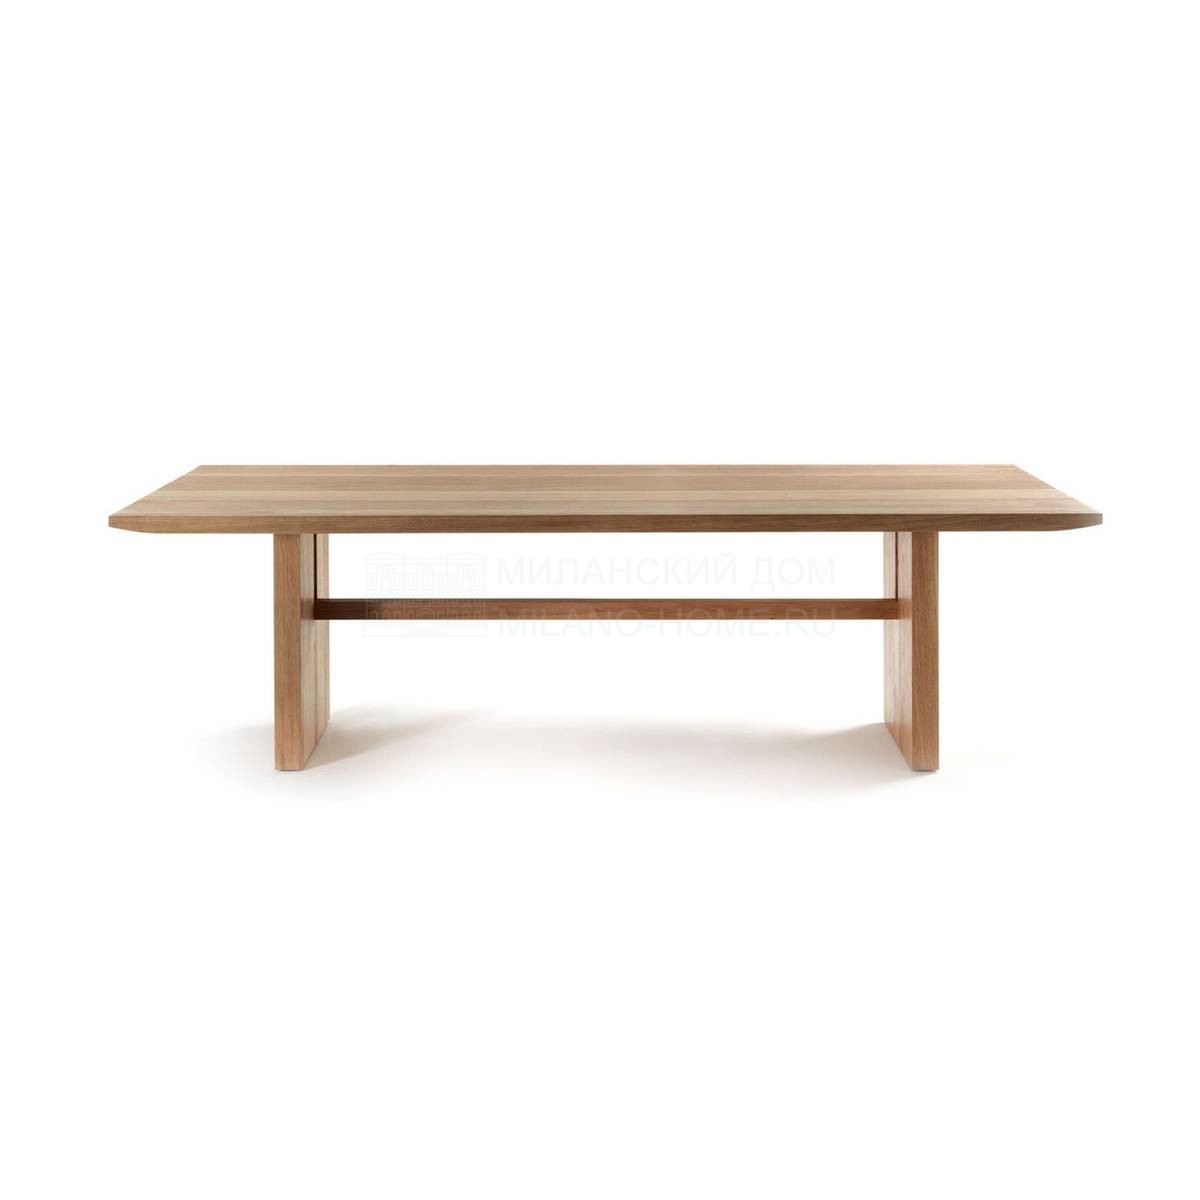 Обеденный стол Arabesque/table из Италии фабрики RIVA1920